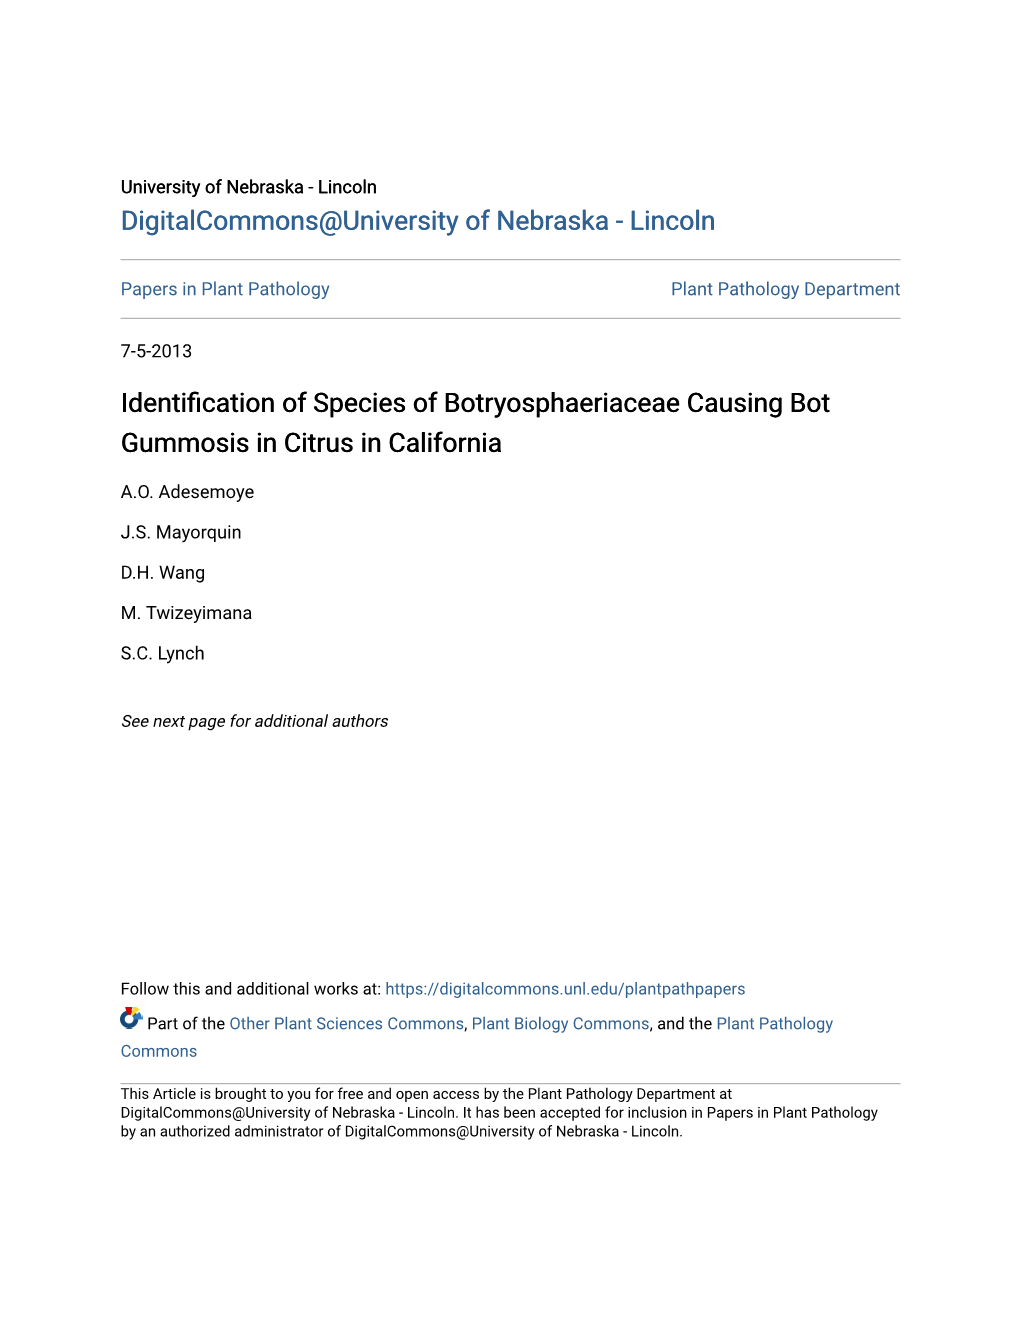 Identification of Species of Botryosphaeriaceae Causing Bot Gummosis in Citrus in California